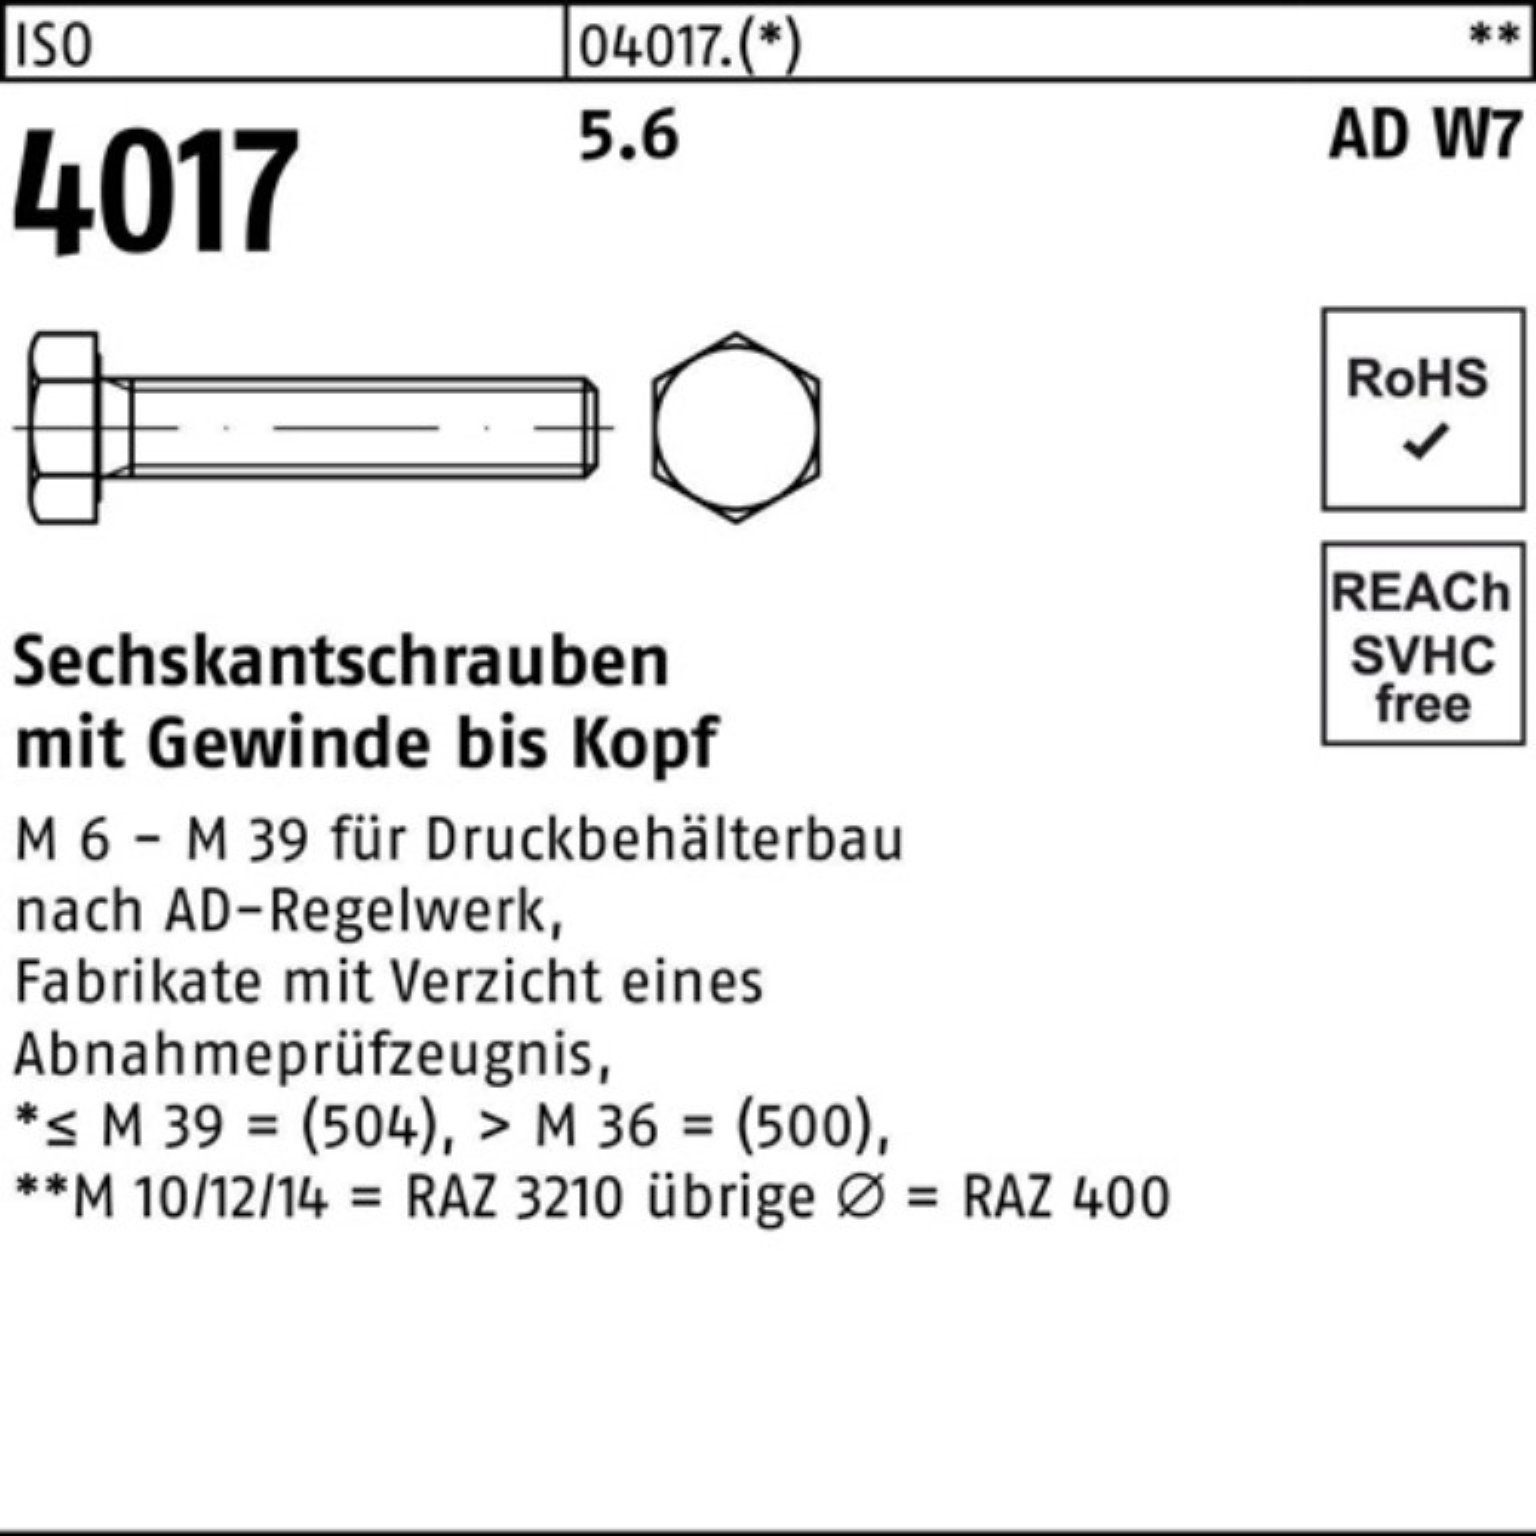 Bufab Sechskantschraube 100er Pack Sechskantschraube ISO 4017 VG M10x 80 5.6 AD W7 100 Stück